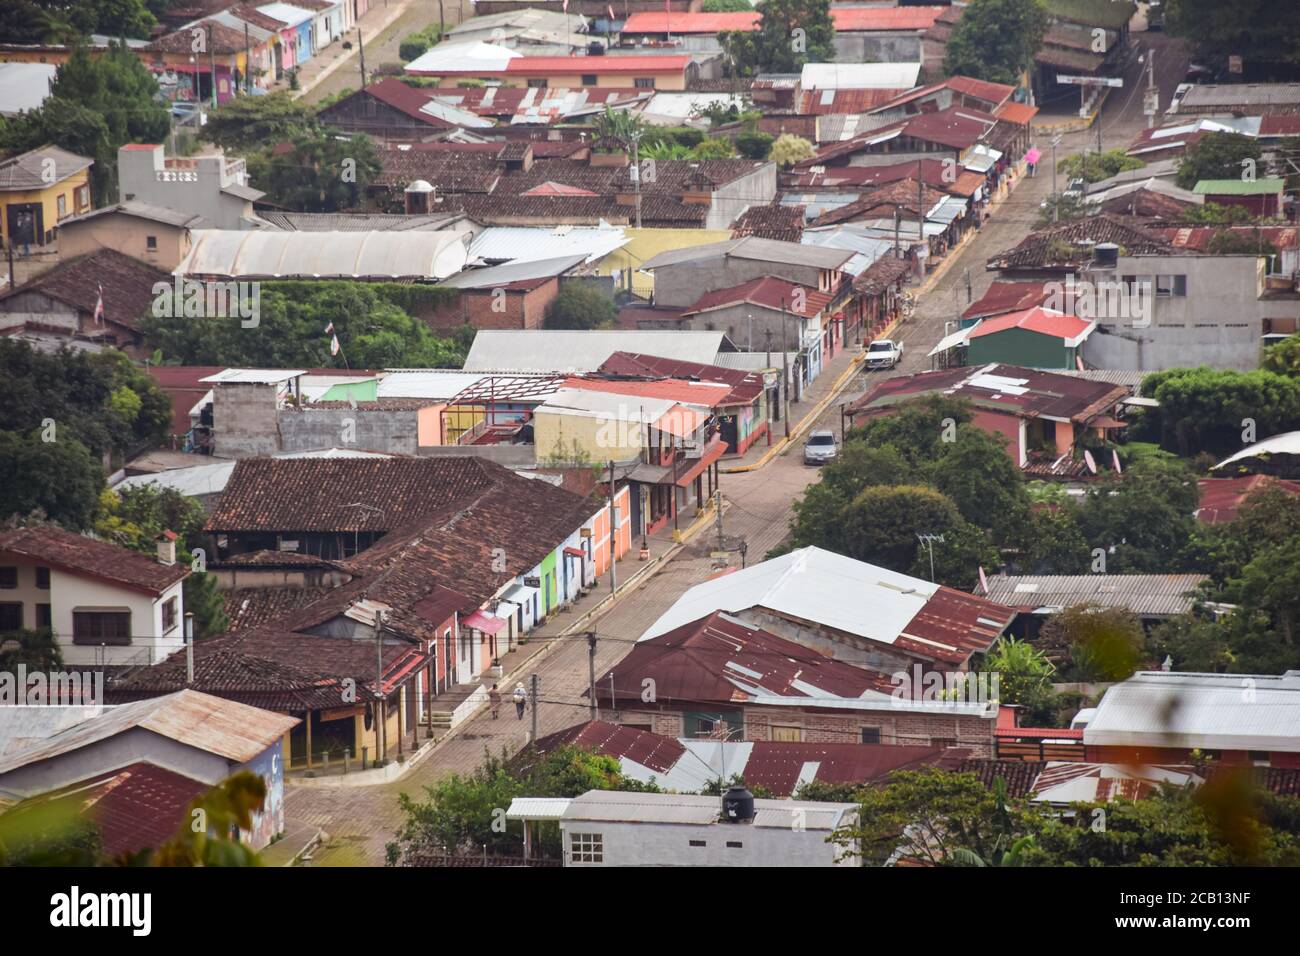 Concepcion de Ataco / El Salvador - 29 octobre 2017 : image panoramique aérienne de la ville Concepcion de Ataco dans la Ruta de las Flores dans les montagnes d'El Salvador Banque D'Images